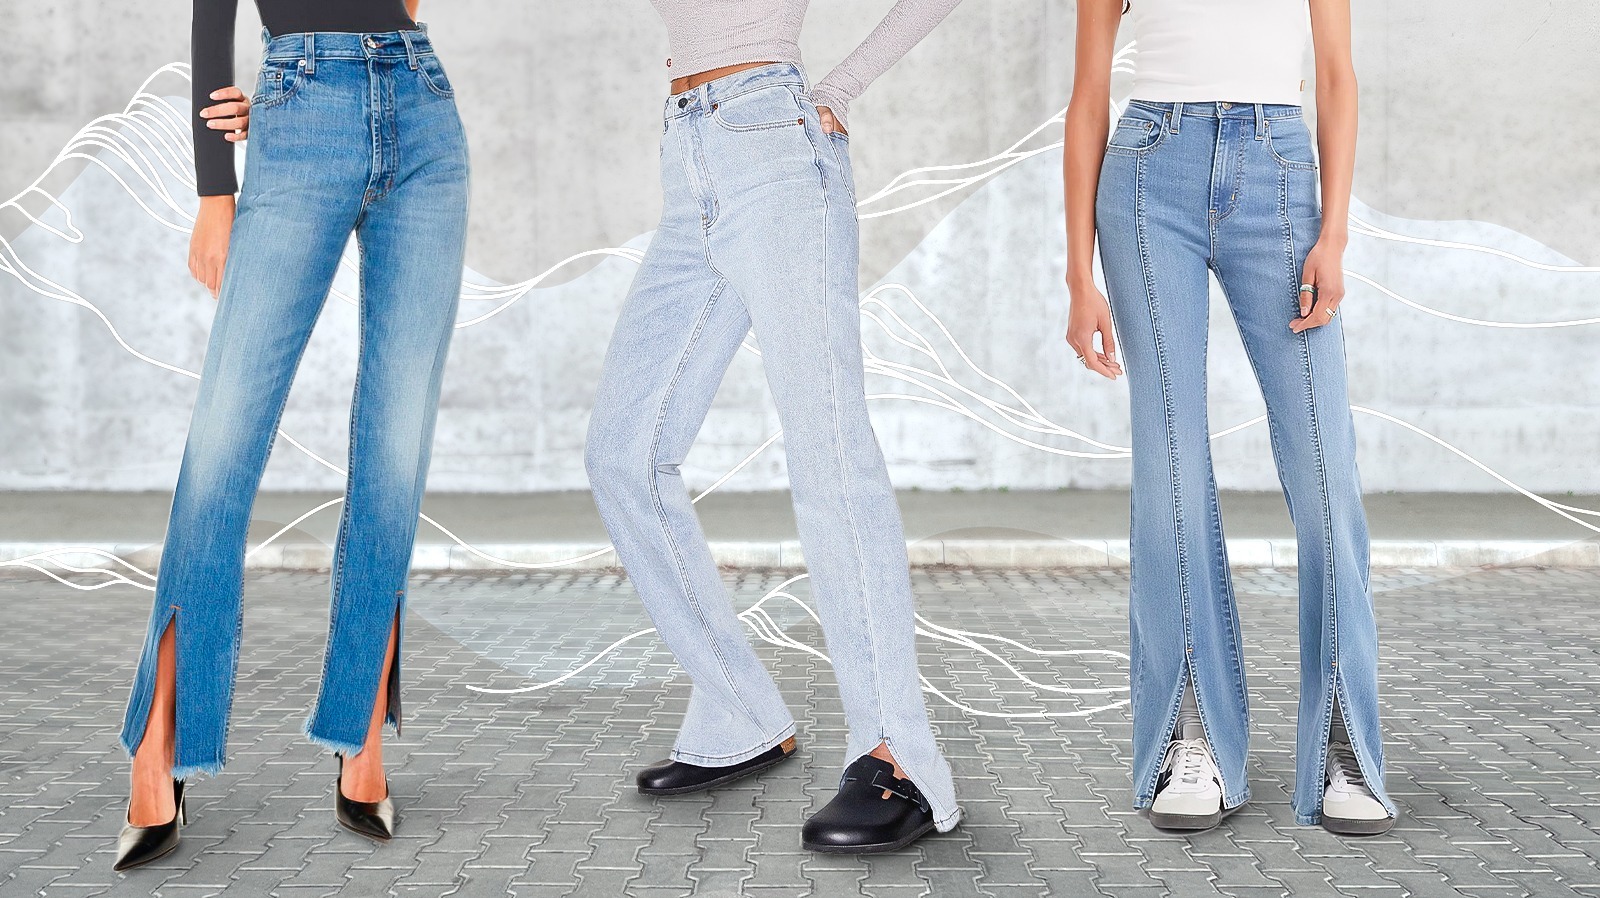 https://www.glam.com/img/gallery/split-hem-jeans-are-the-cool-girl-denim-trend-for-fall-2023/l-intro-1698356907.jpg